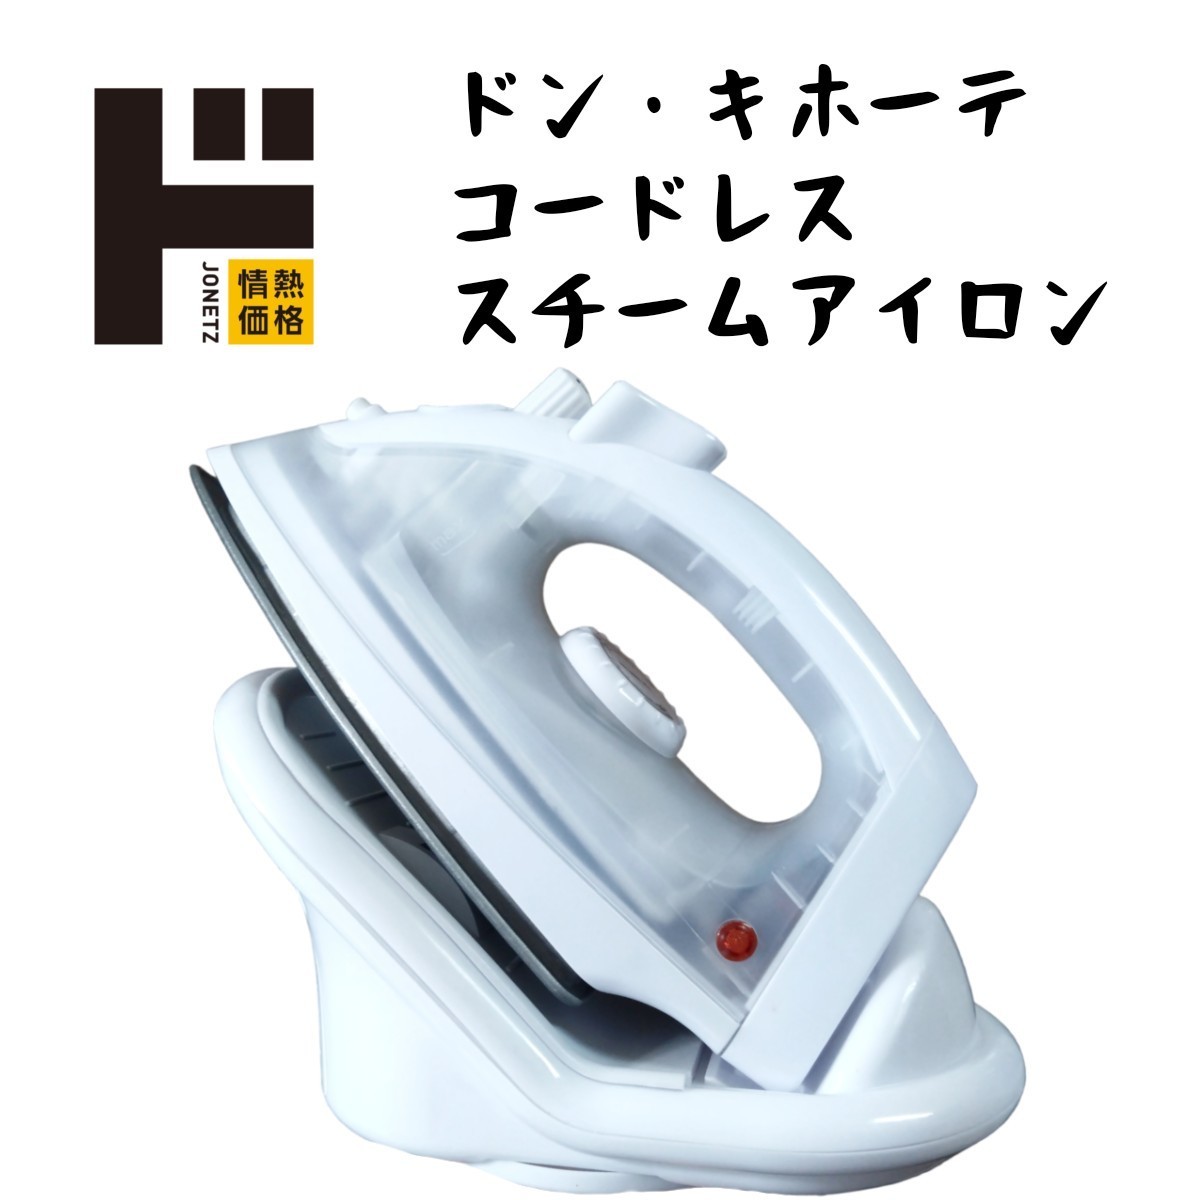 [ beautiful goods ] Don *ki horn te passion price cordless steam iron iron cleaning no.8